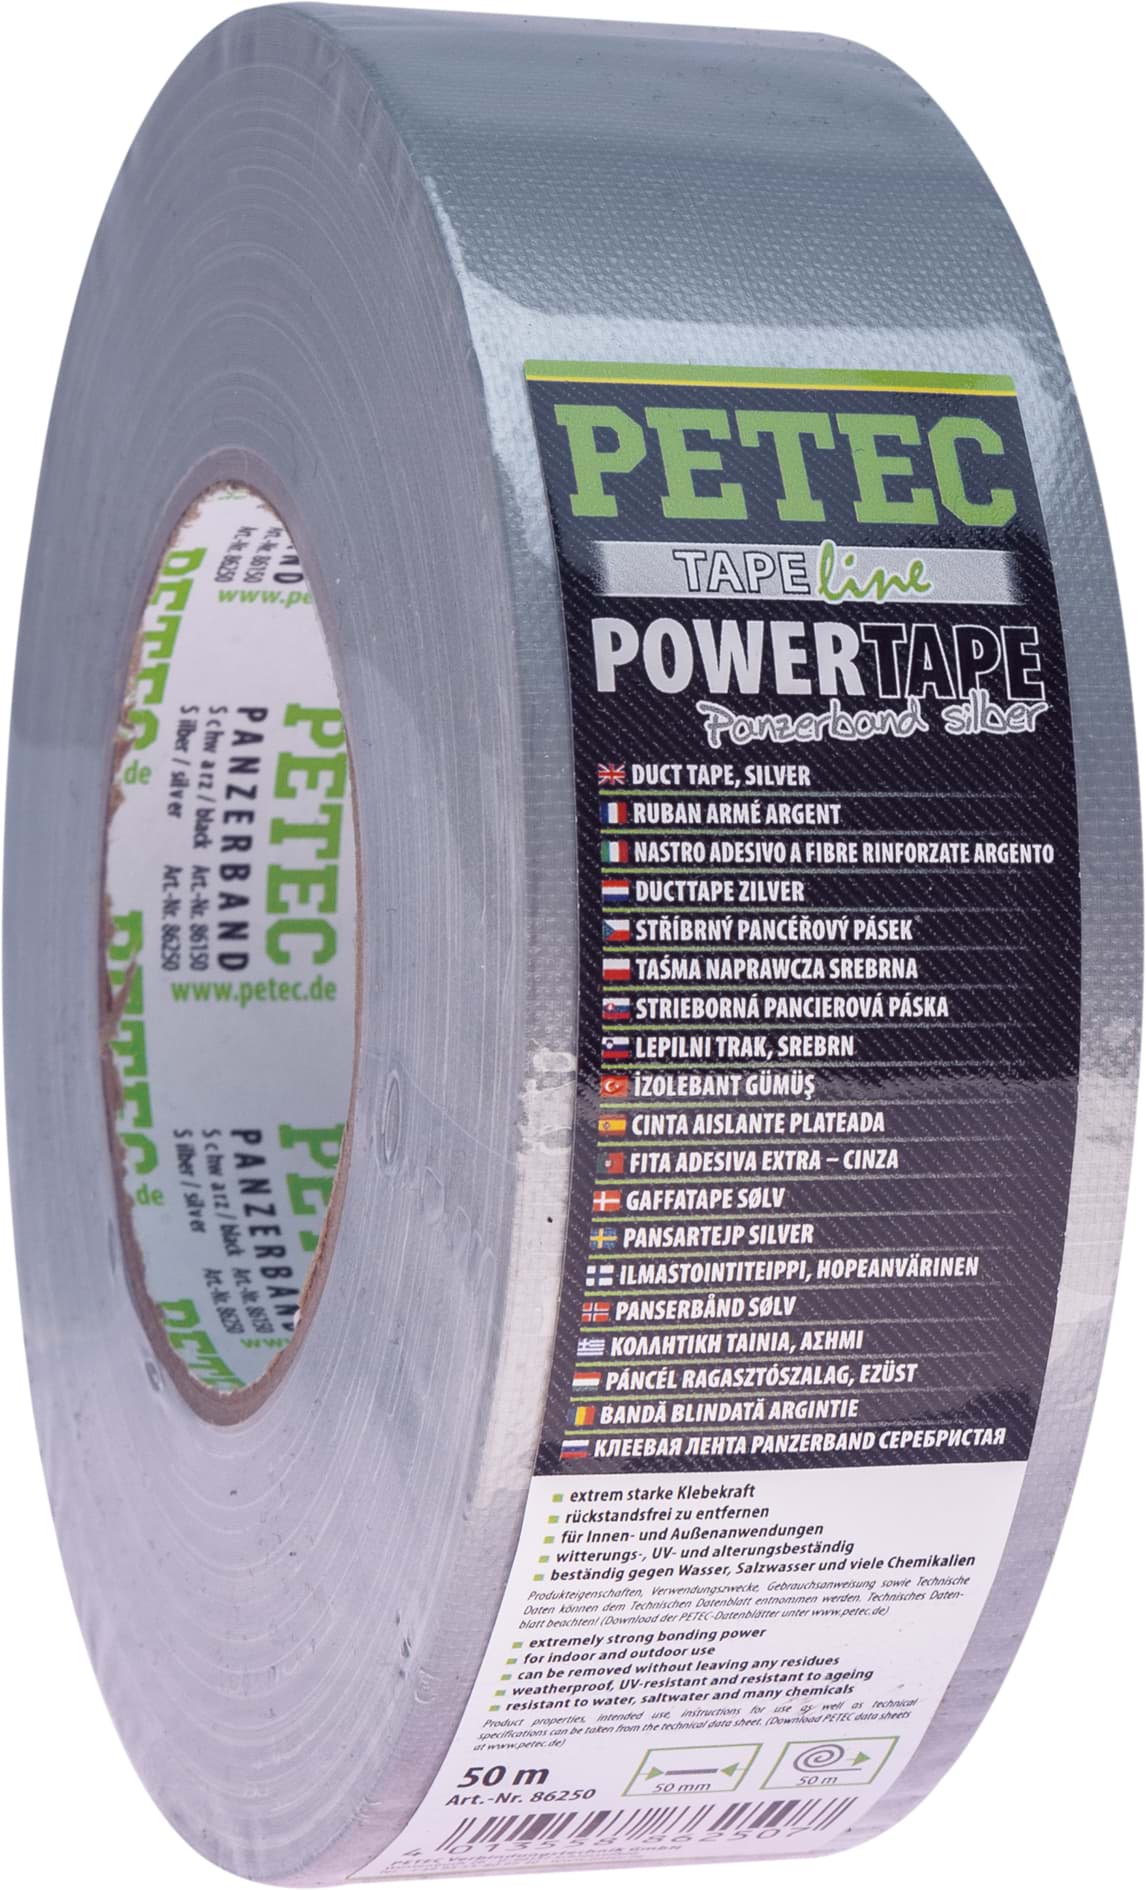 Изображение Petec Power Tape Panzerband silber 50m